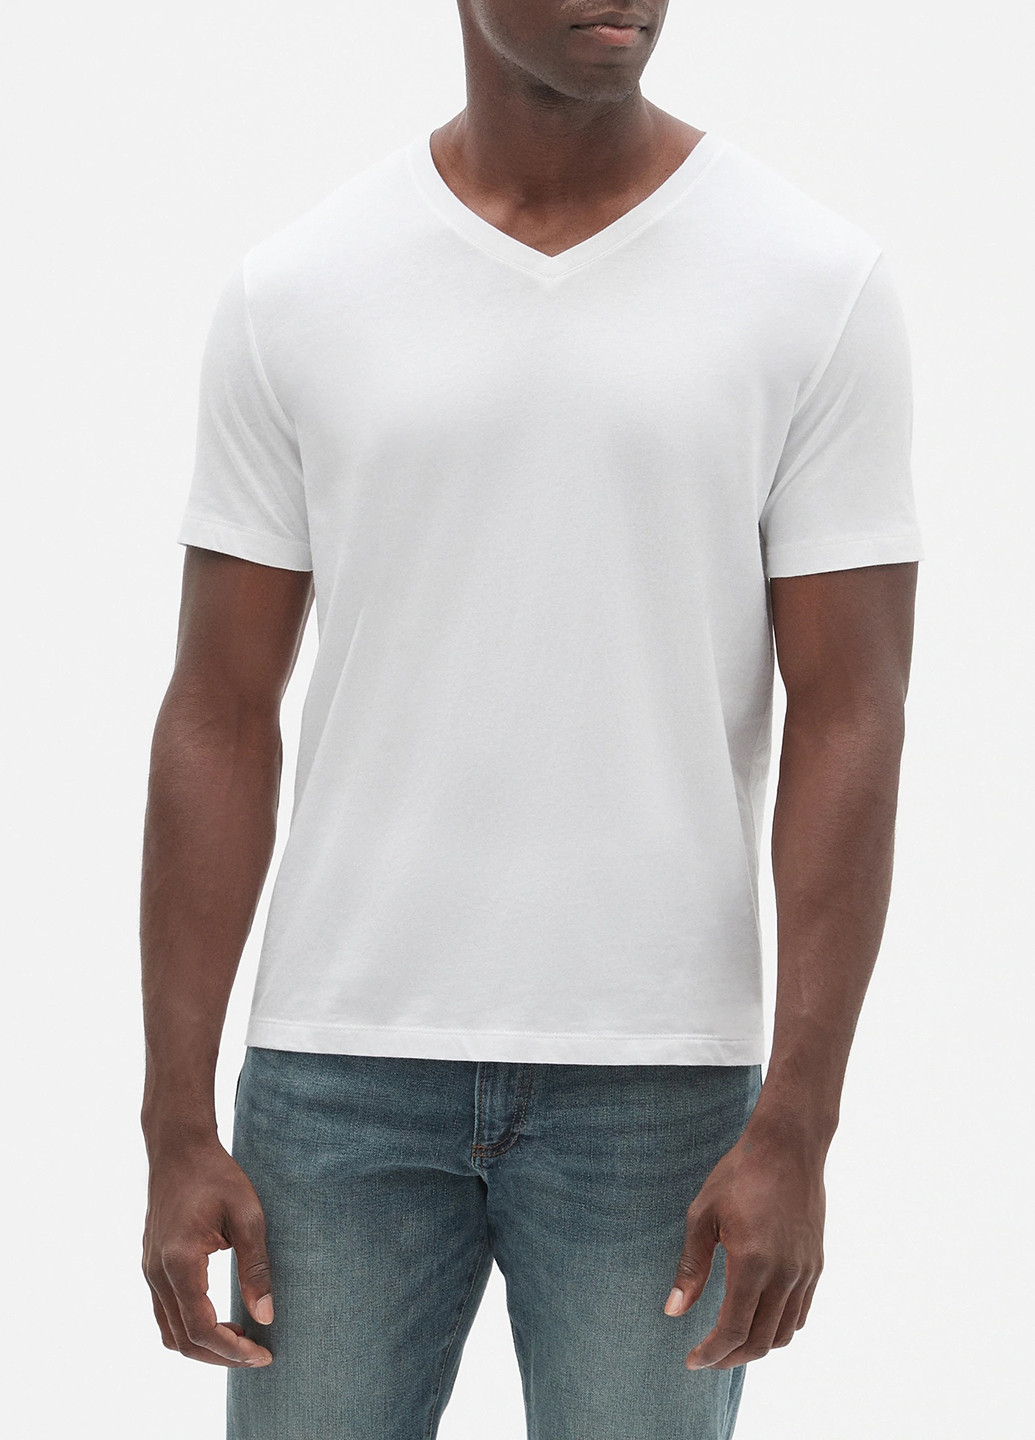 Белая футболка Gap